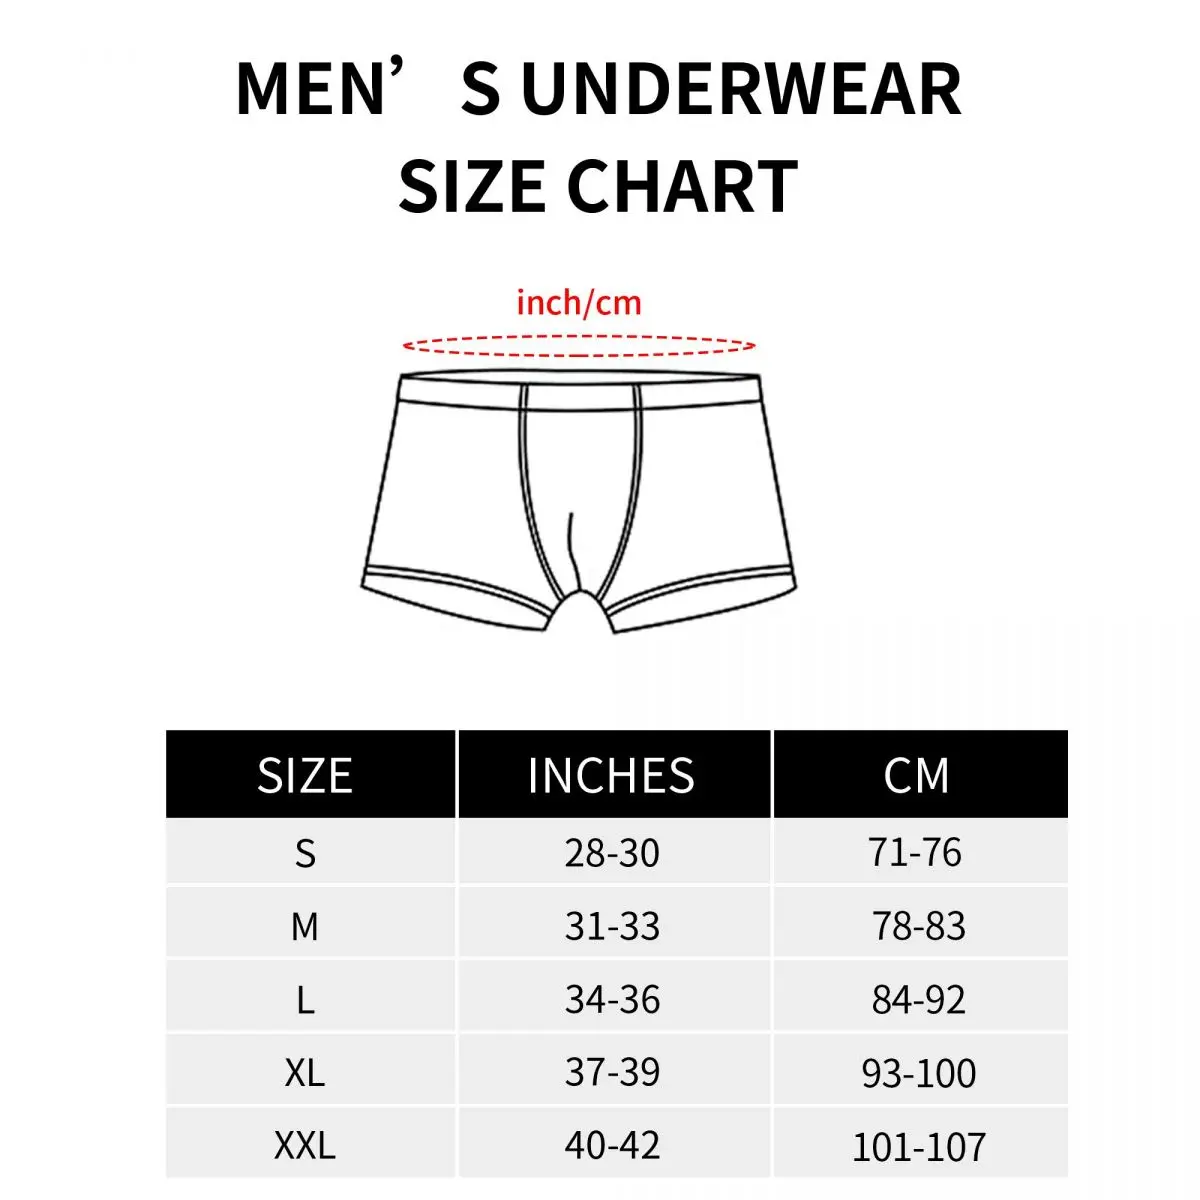 Men Italy Boxer Briefs Shorts Panties Soft Underwear Italian Flag Male  Funny Underpants - AliExpress